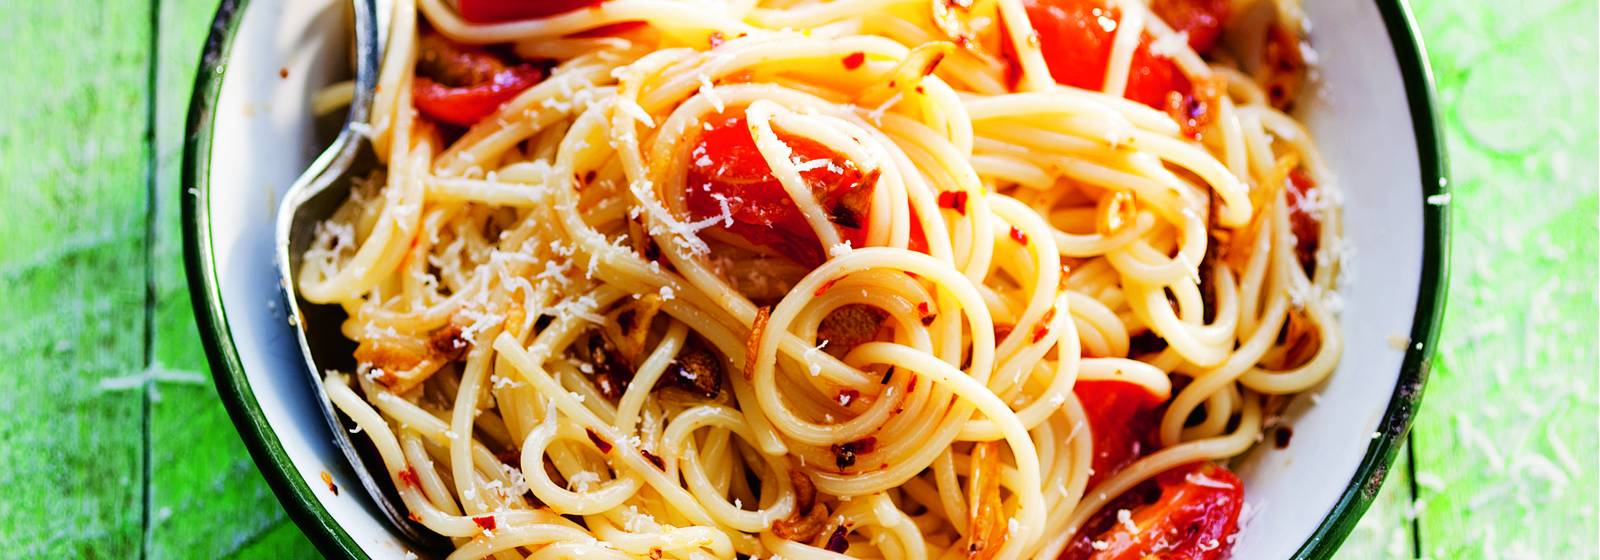 Spaghetti Allarrabbiata Recept Allerhande Albert Heijn 3587